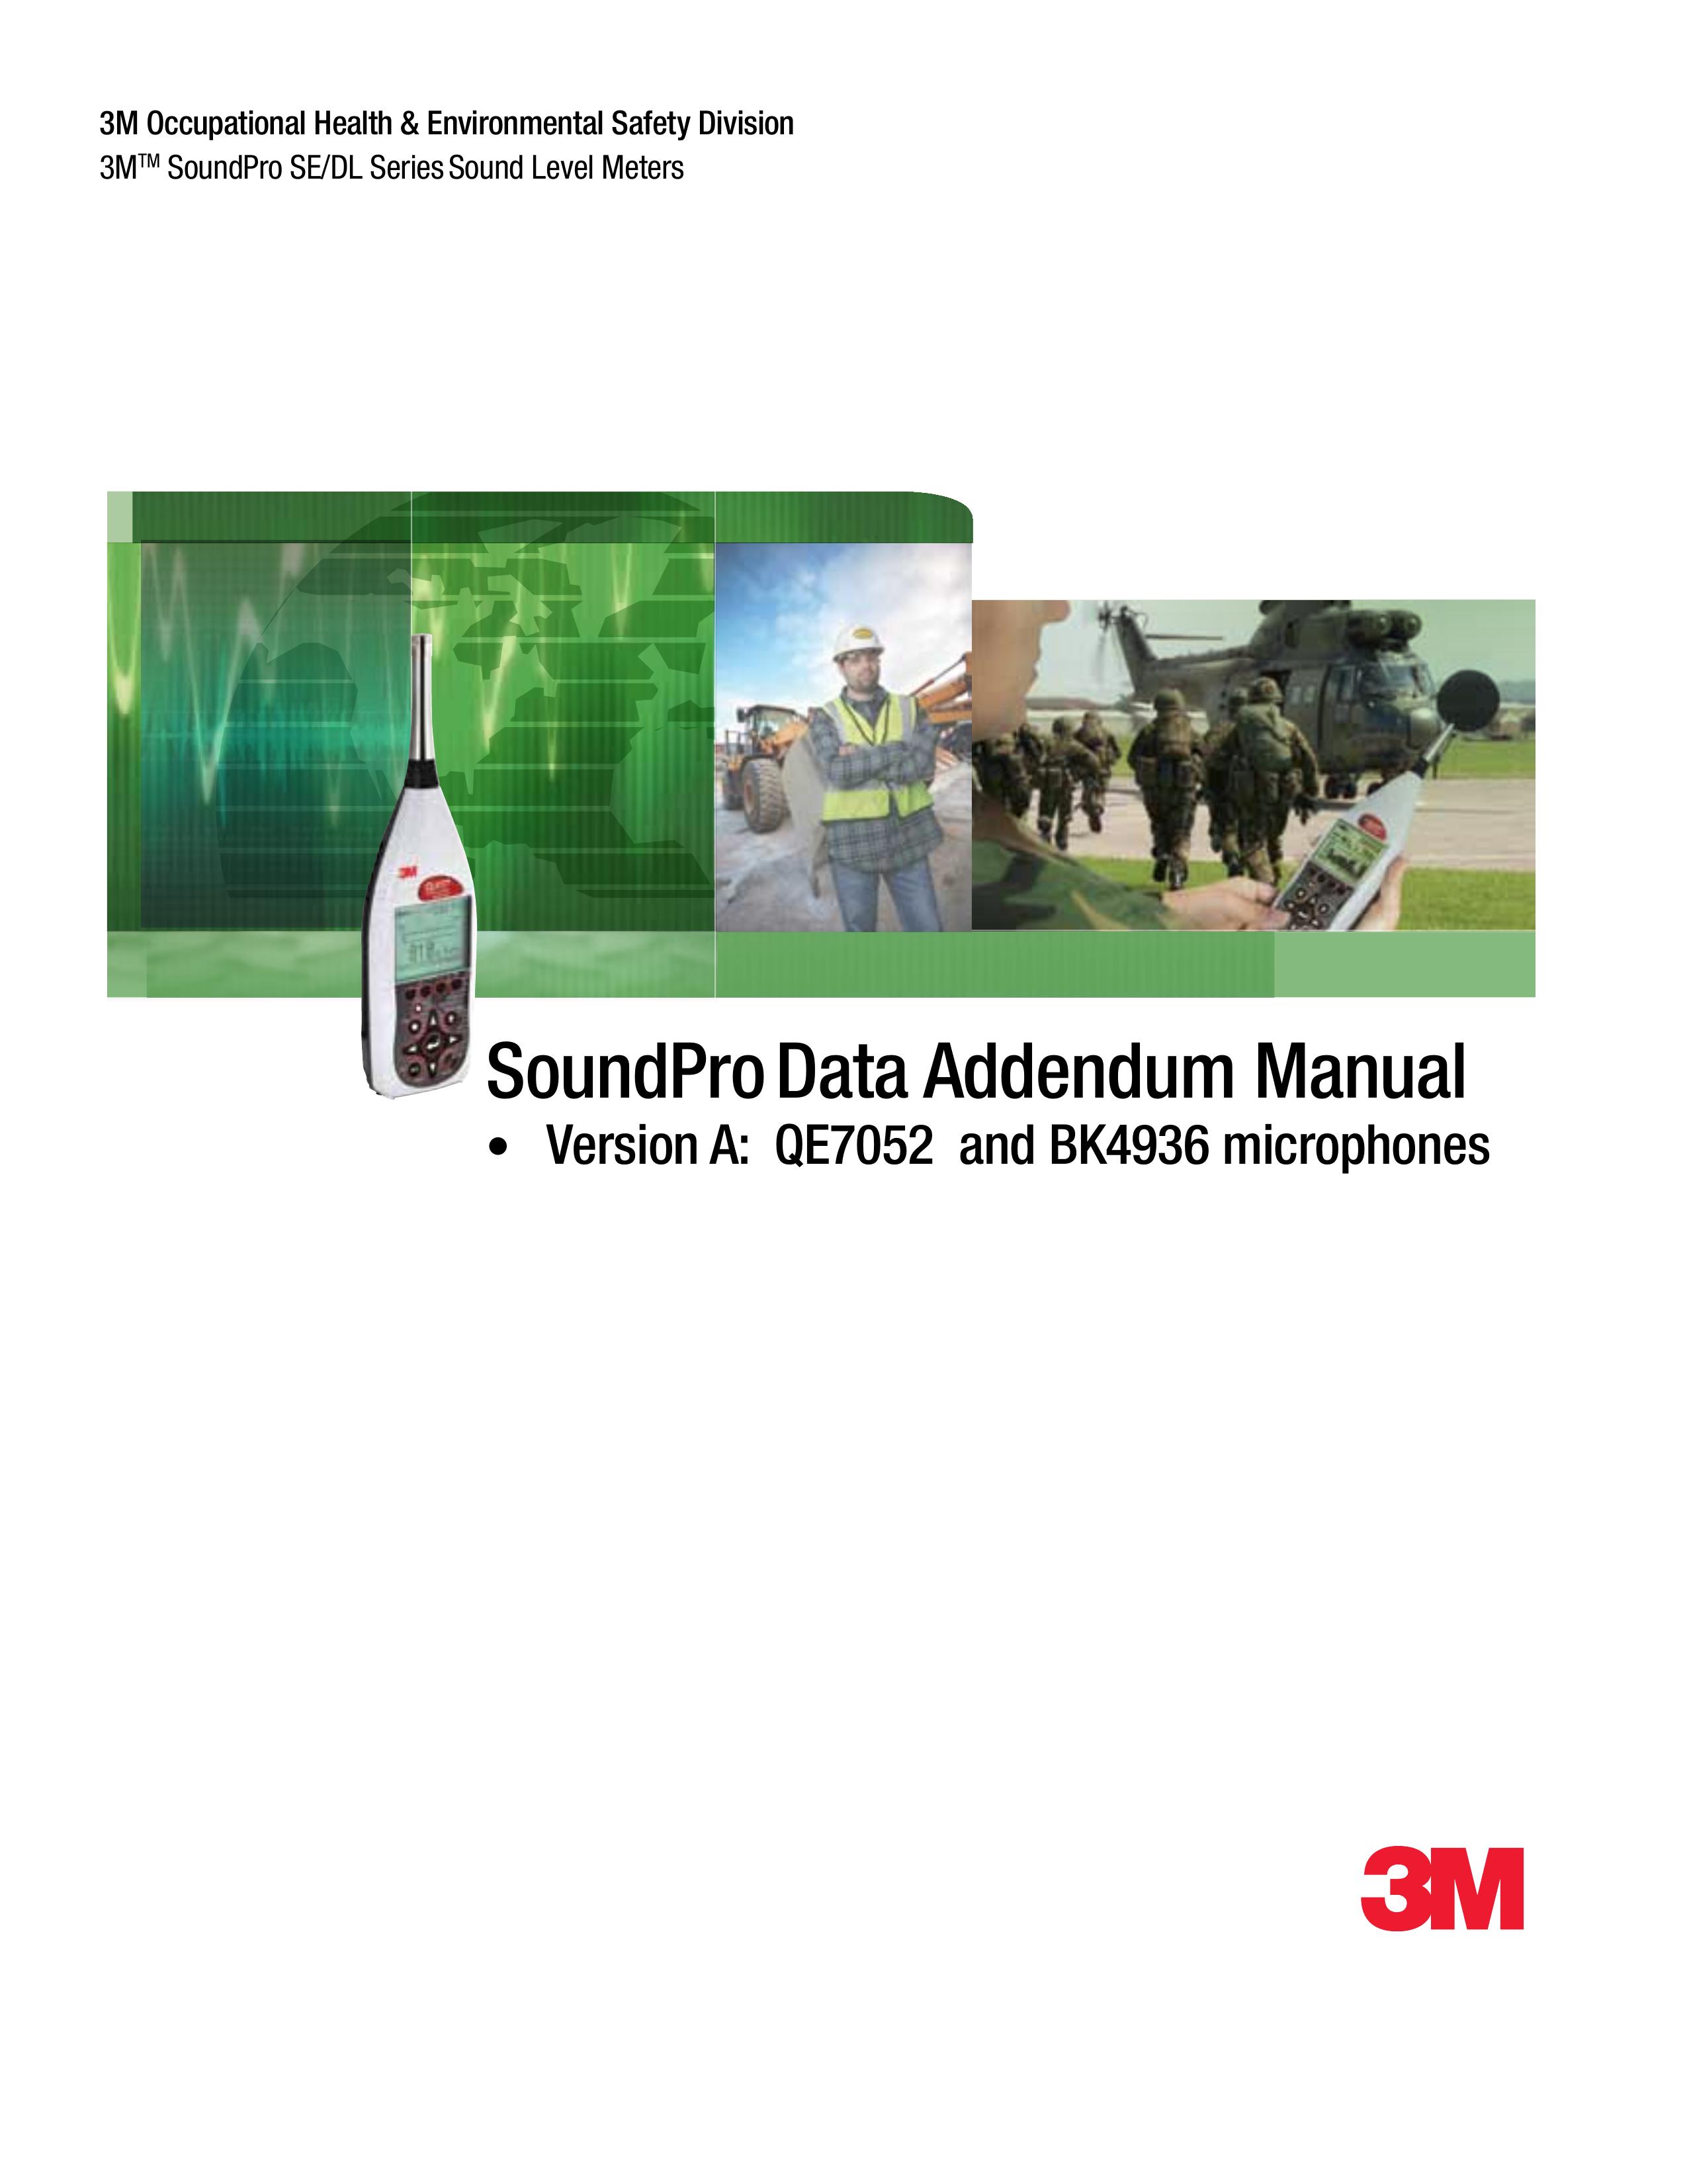 3M BK4936 Microphone User Manual